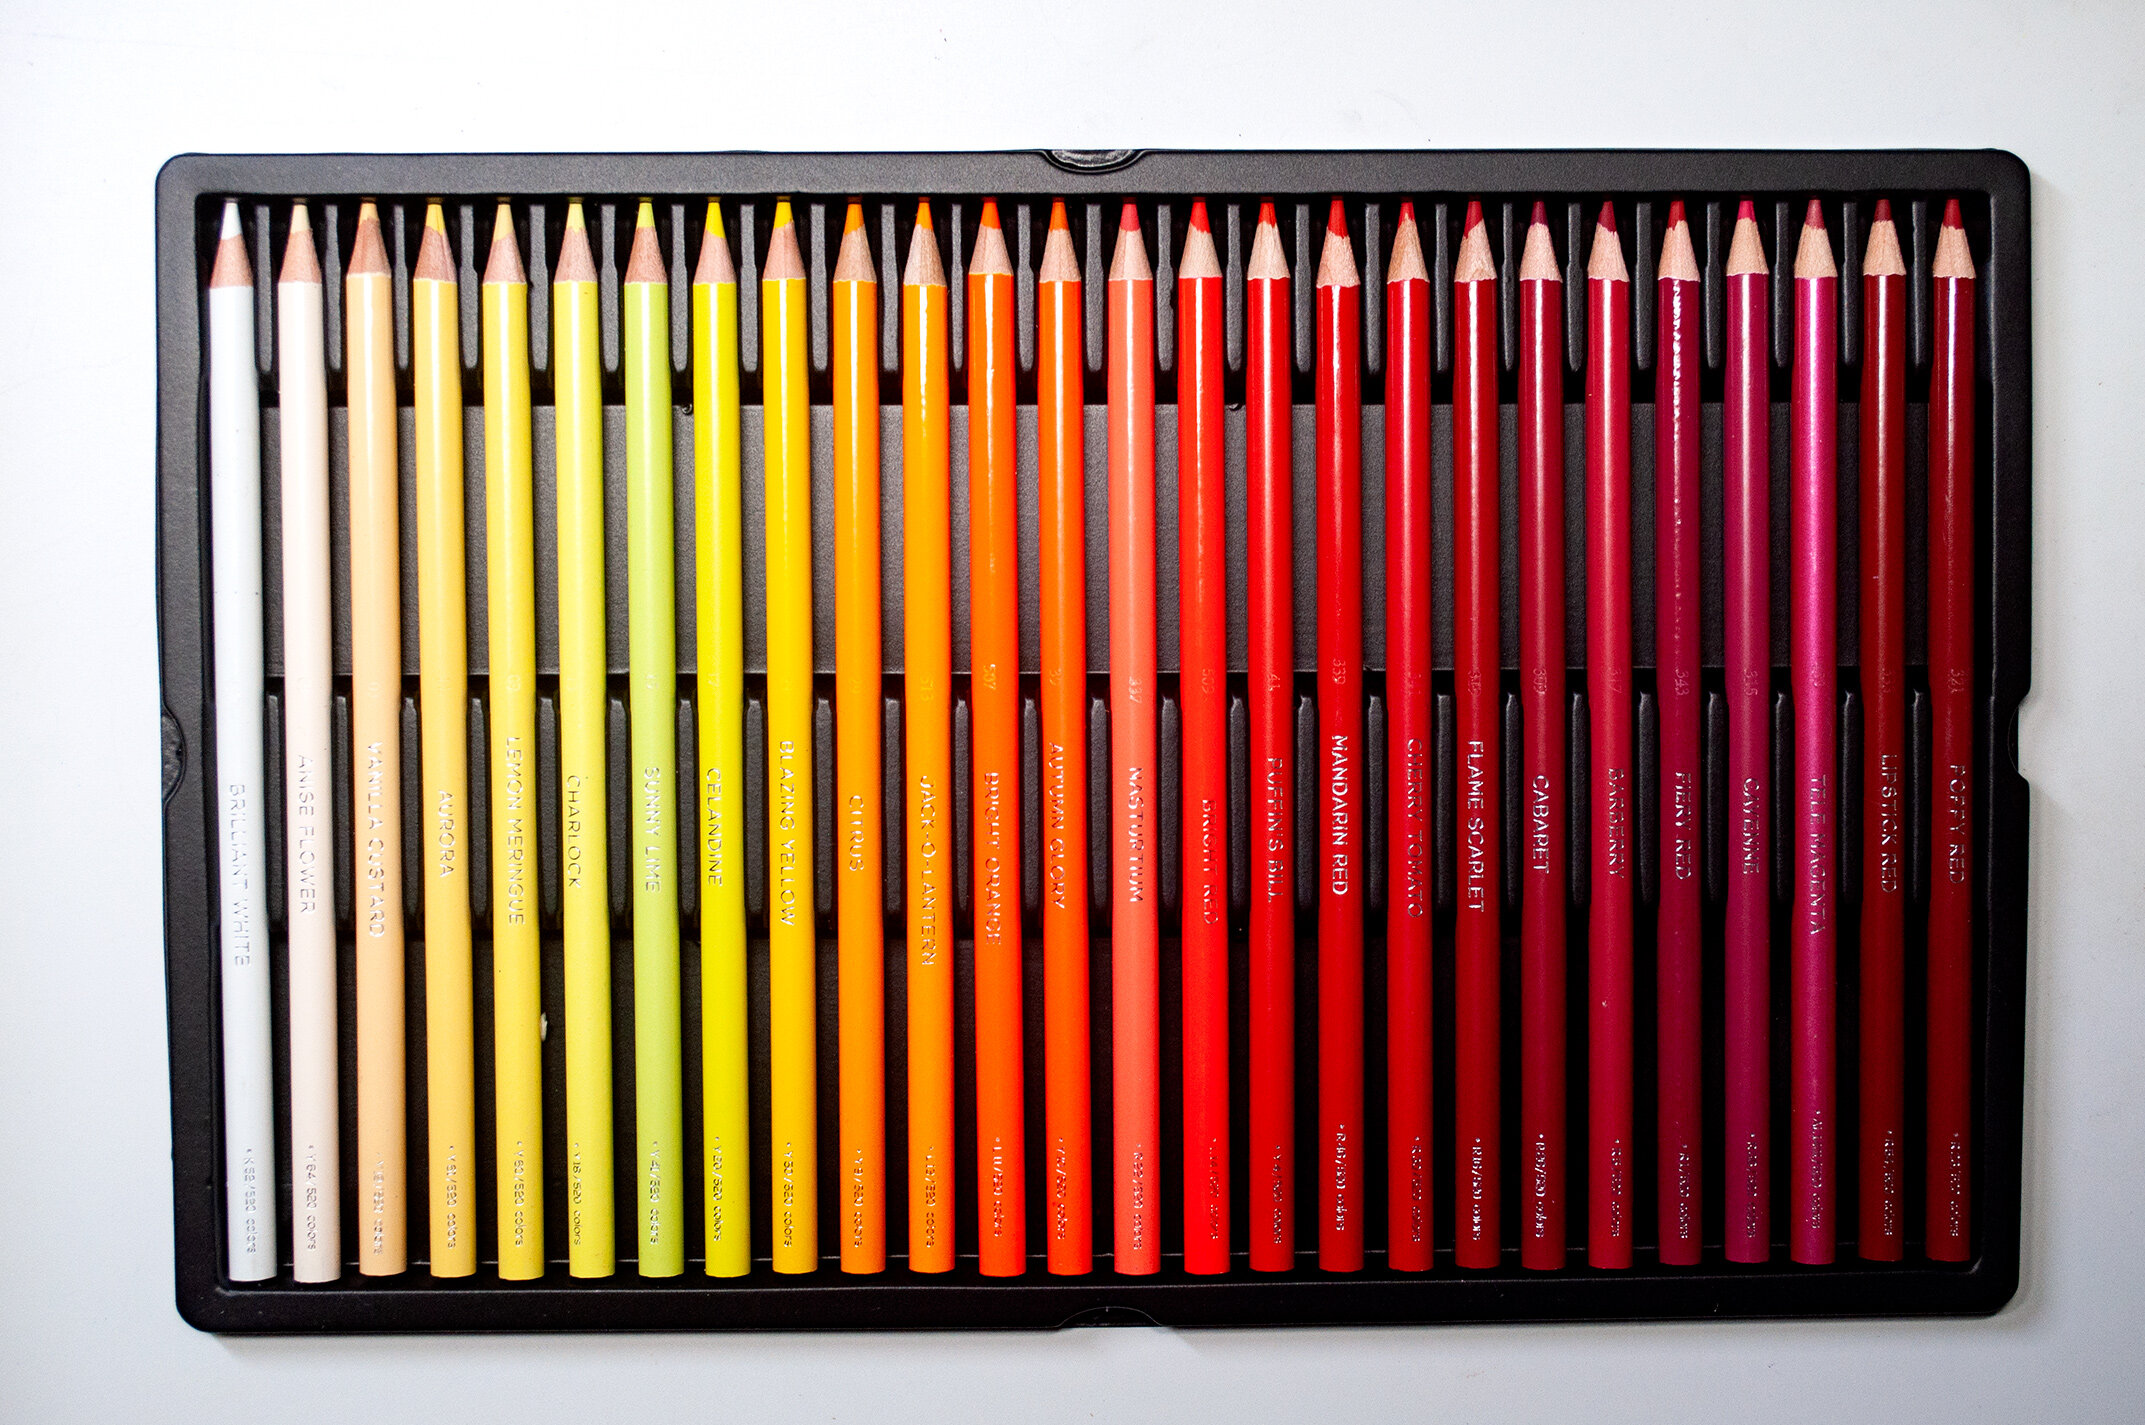  LEIGE 120/180/520 Colored Pencils Professional Set